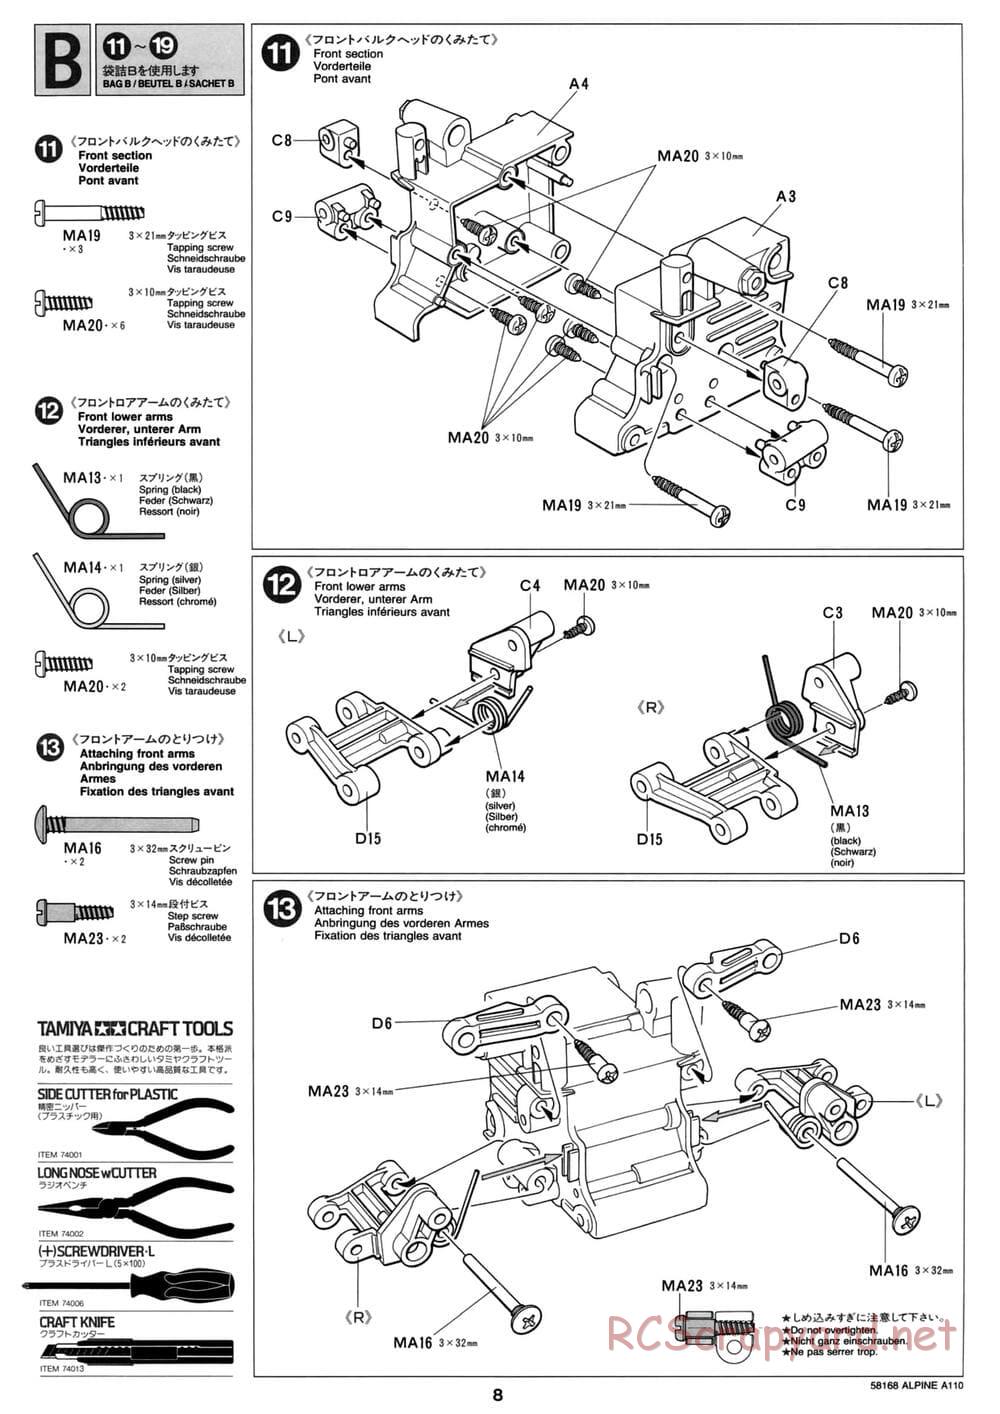 Tamiya - Alpine A110 - M02 Chassis - Manual - Page 8